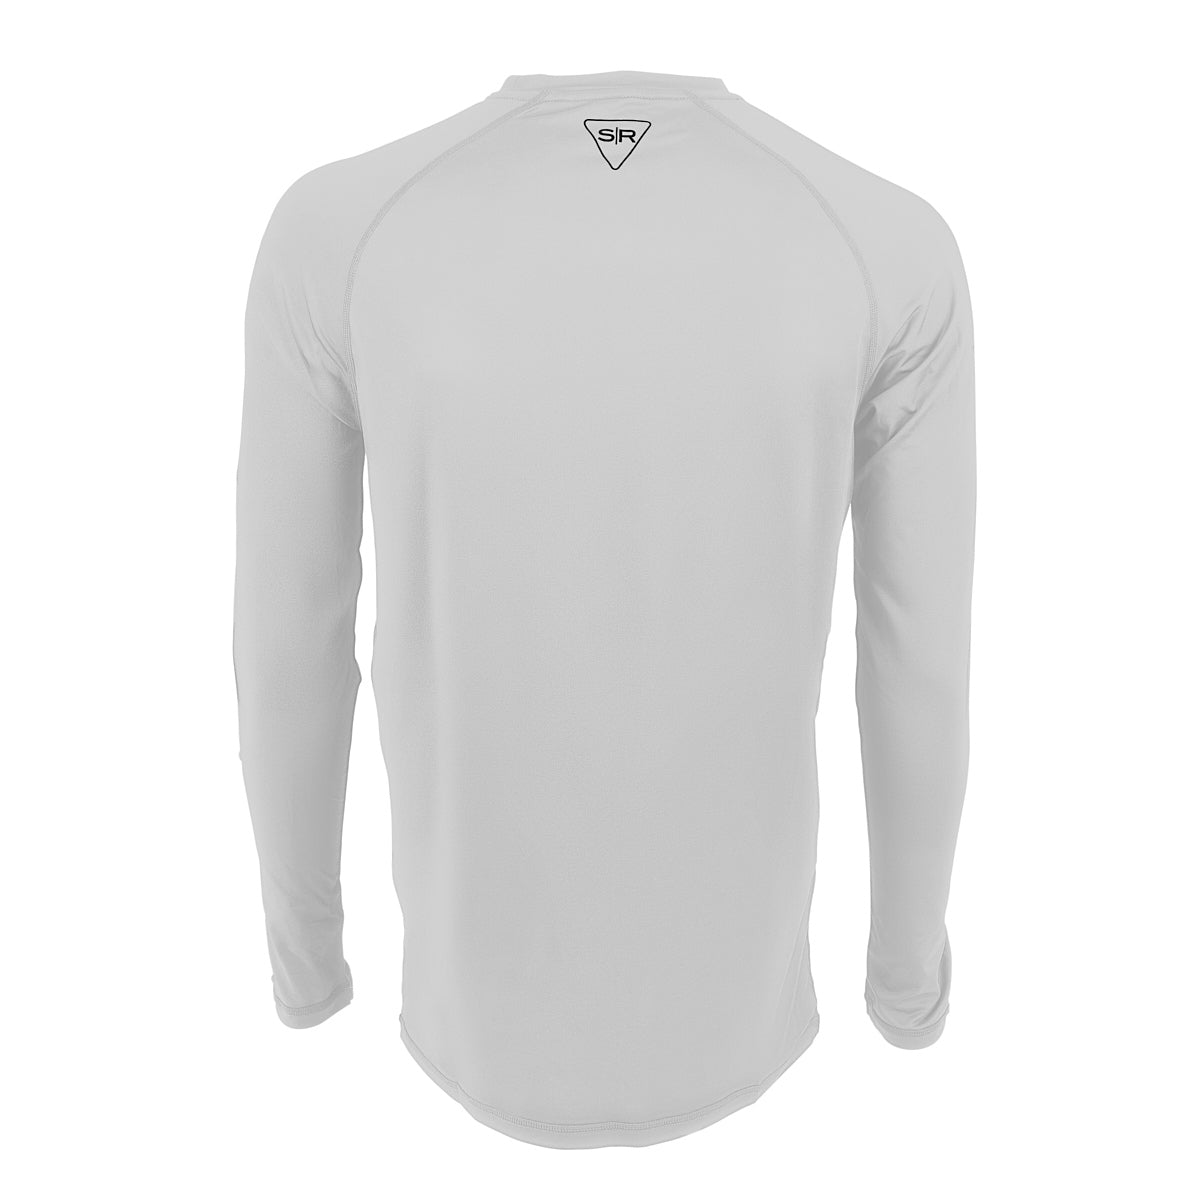 UV Protection Long Sleeve Shirt - White | Shady Rays